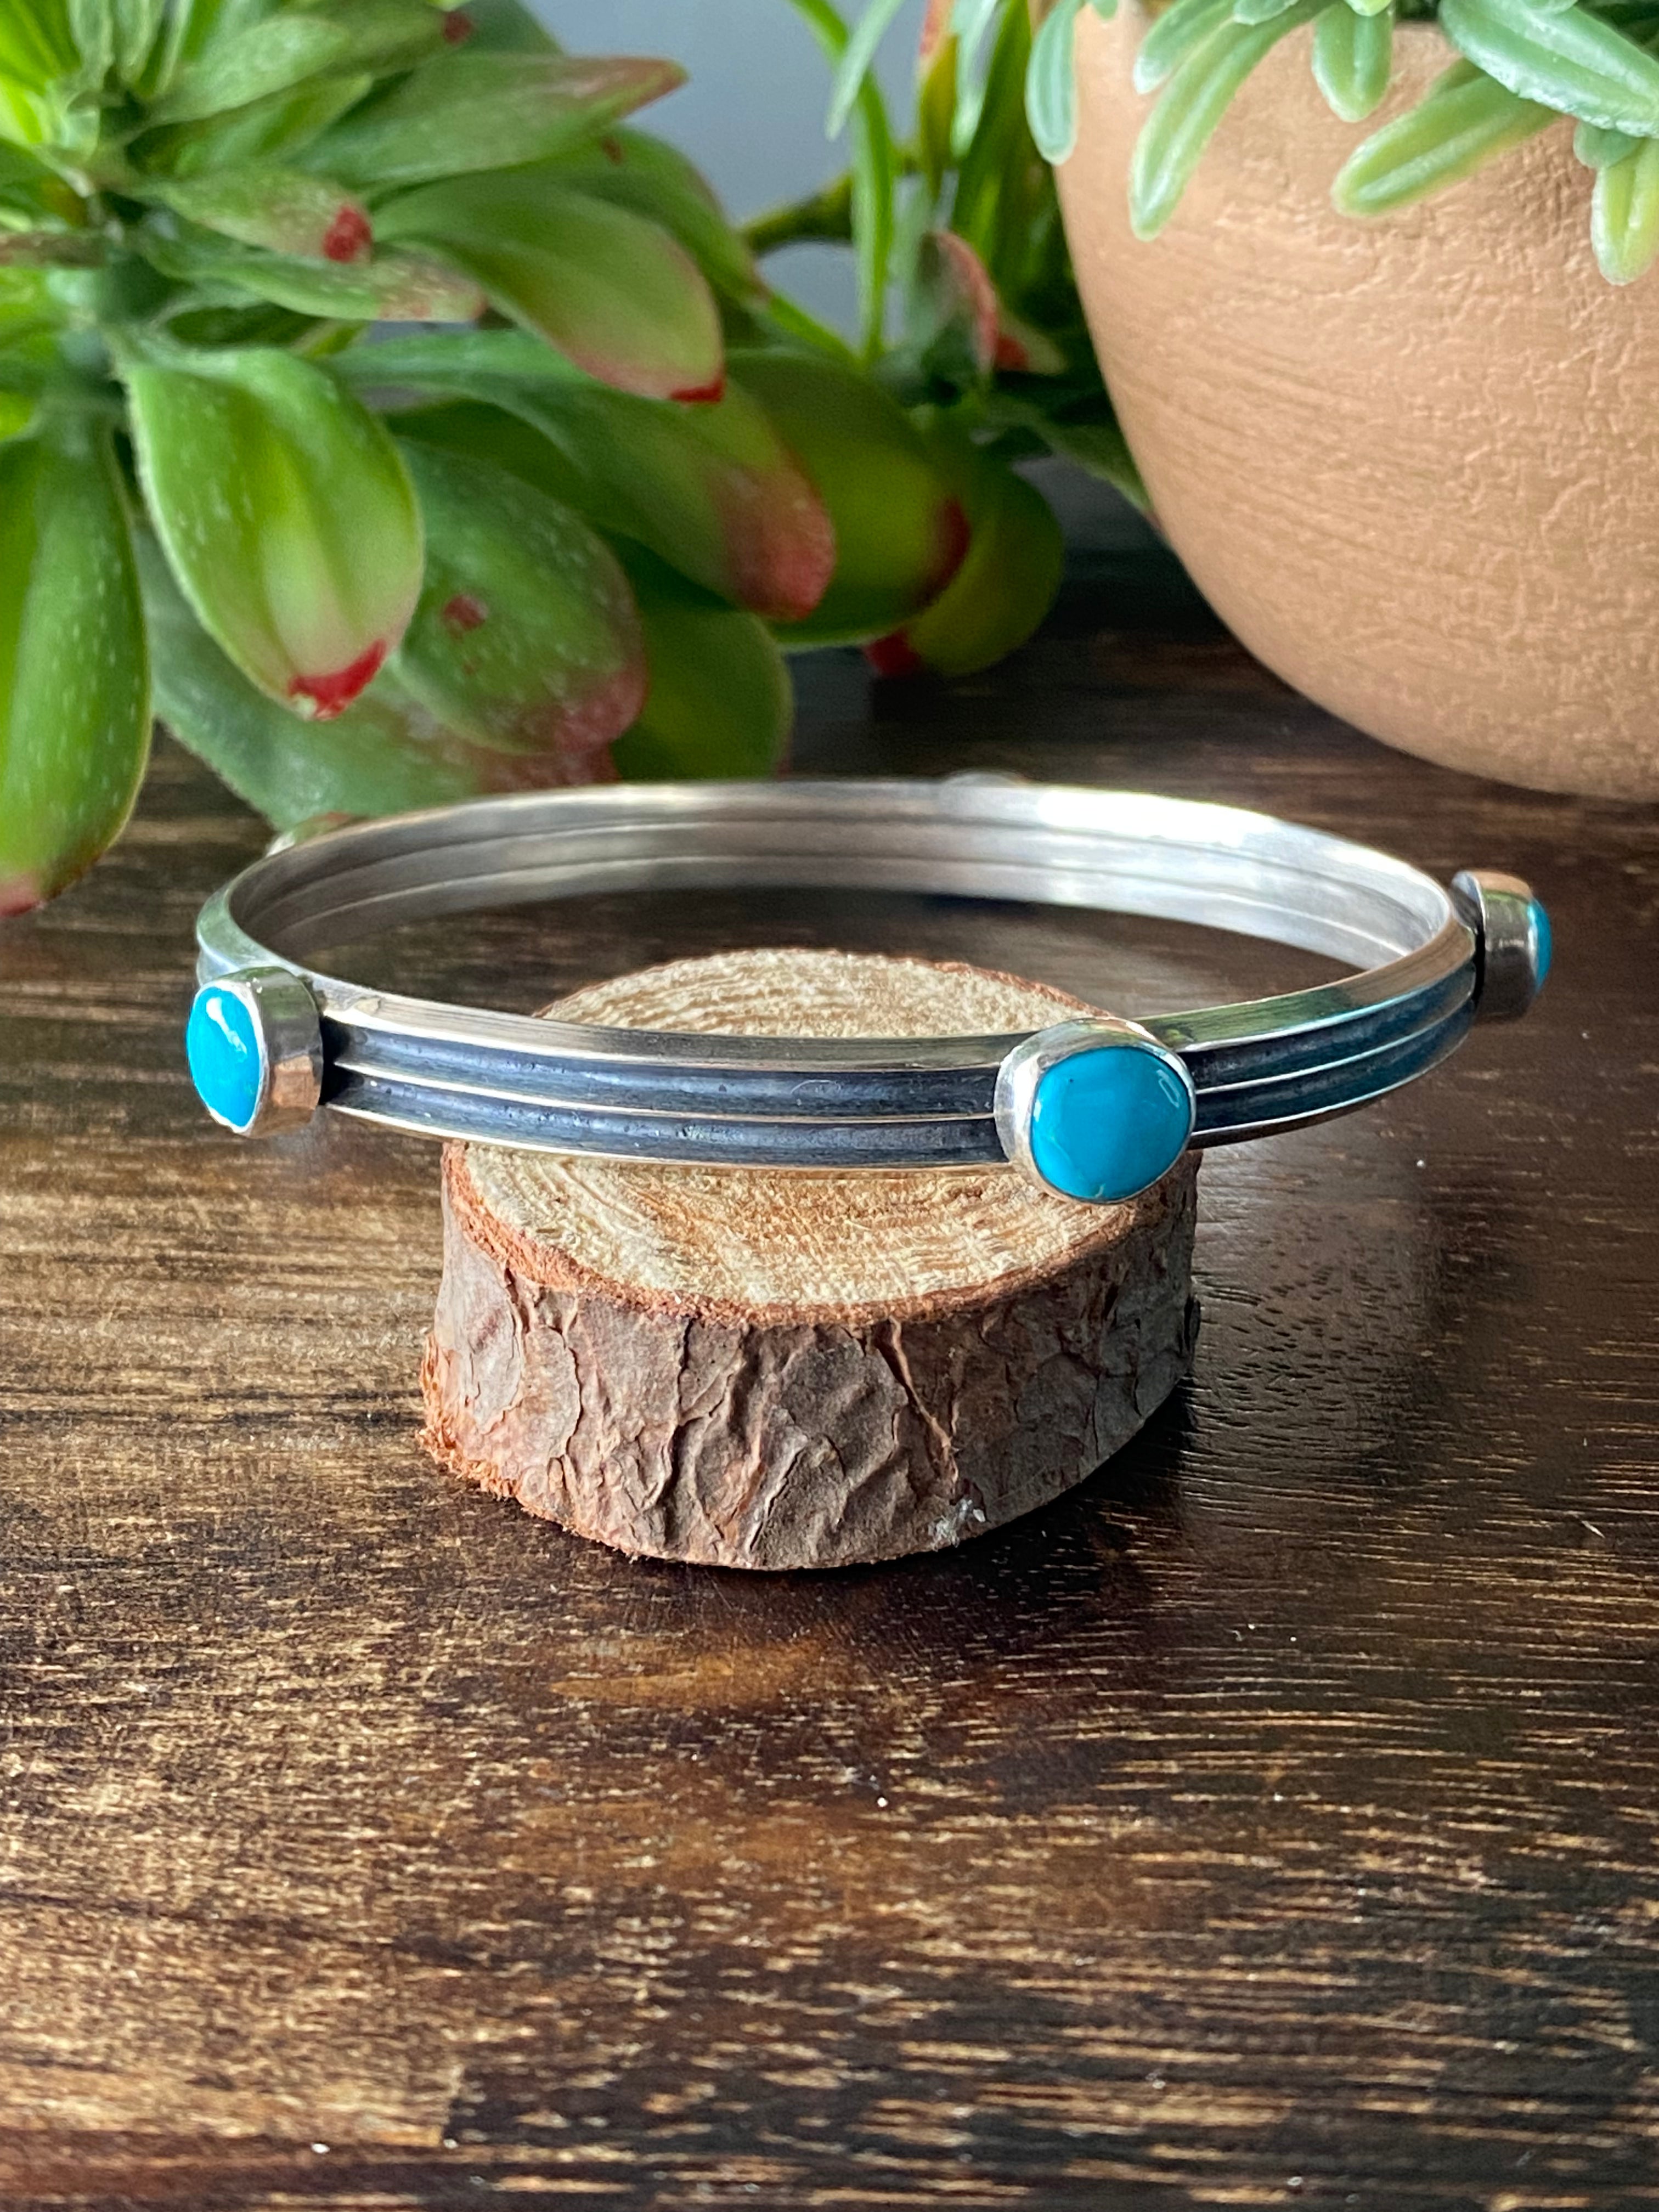 Navajo Made Kingman Turquoise & Sterling Silver Bangle Bracelet